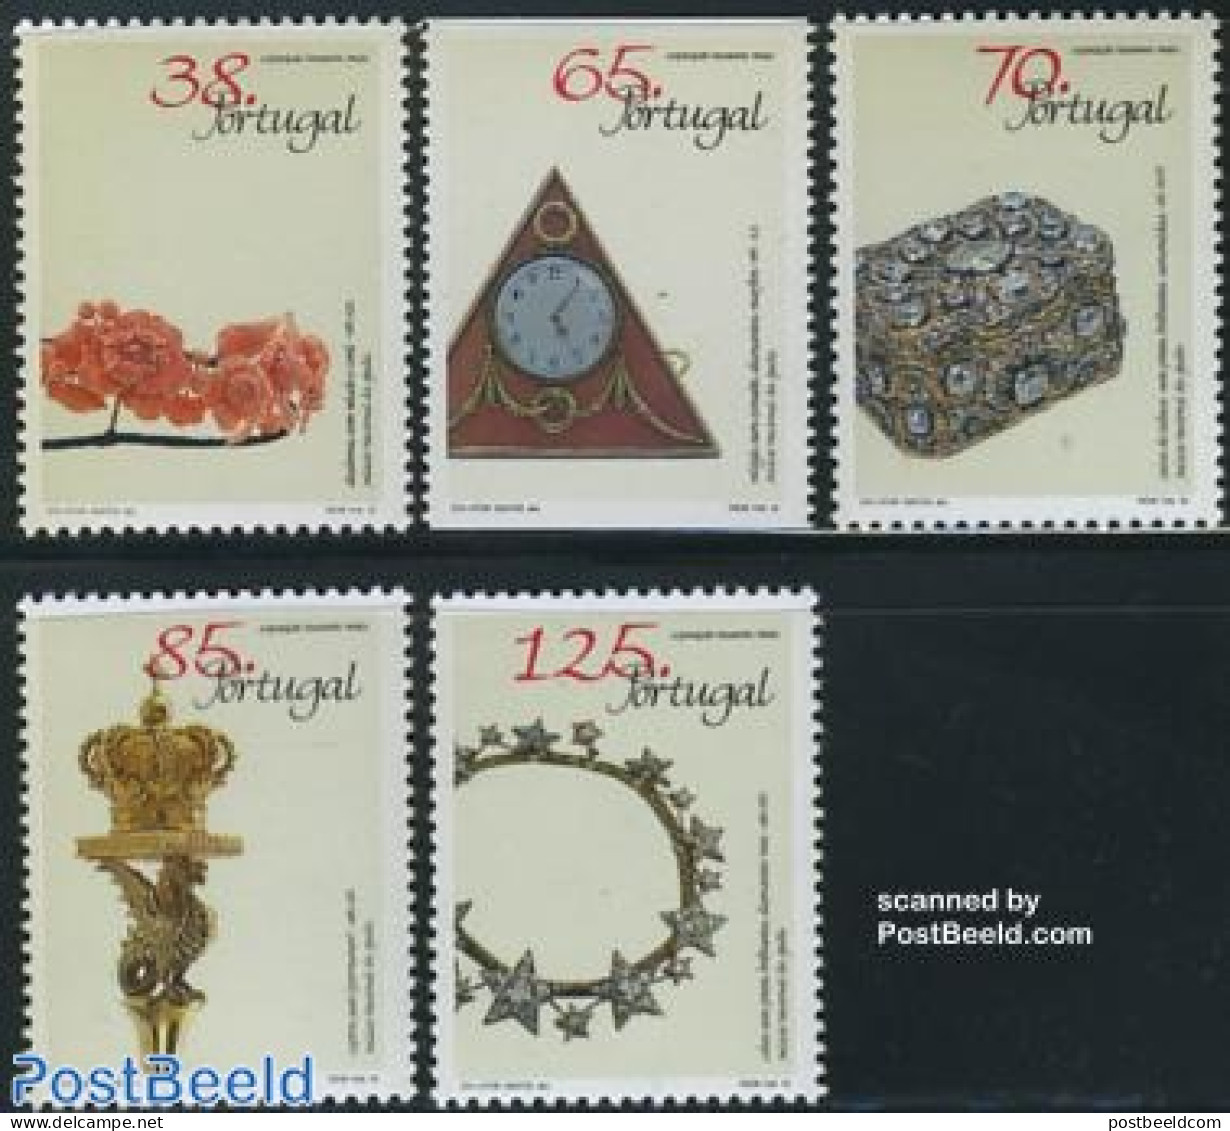 Portugal 1992 Royal Treasures 5v, Mint NH, Art - Art & Antique Objects - Nuevos